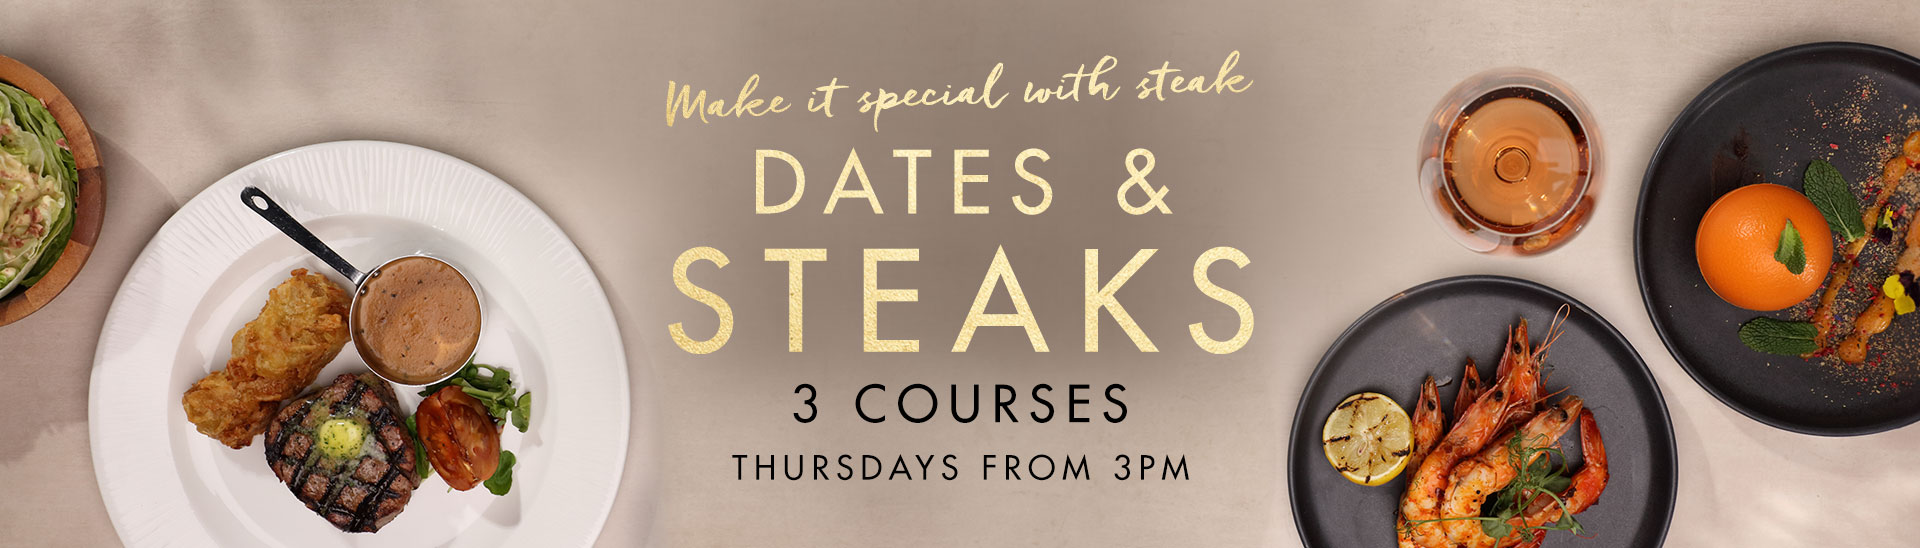 Dates & Steaks at Miller & Carter Swindon